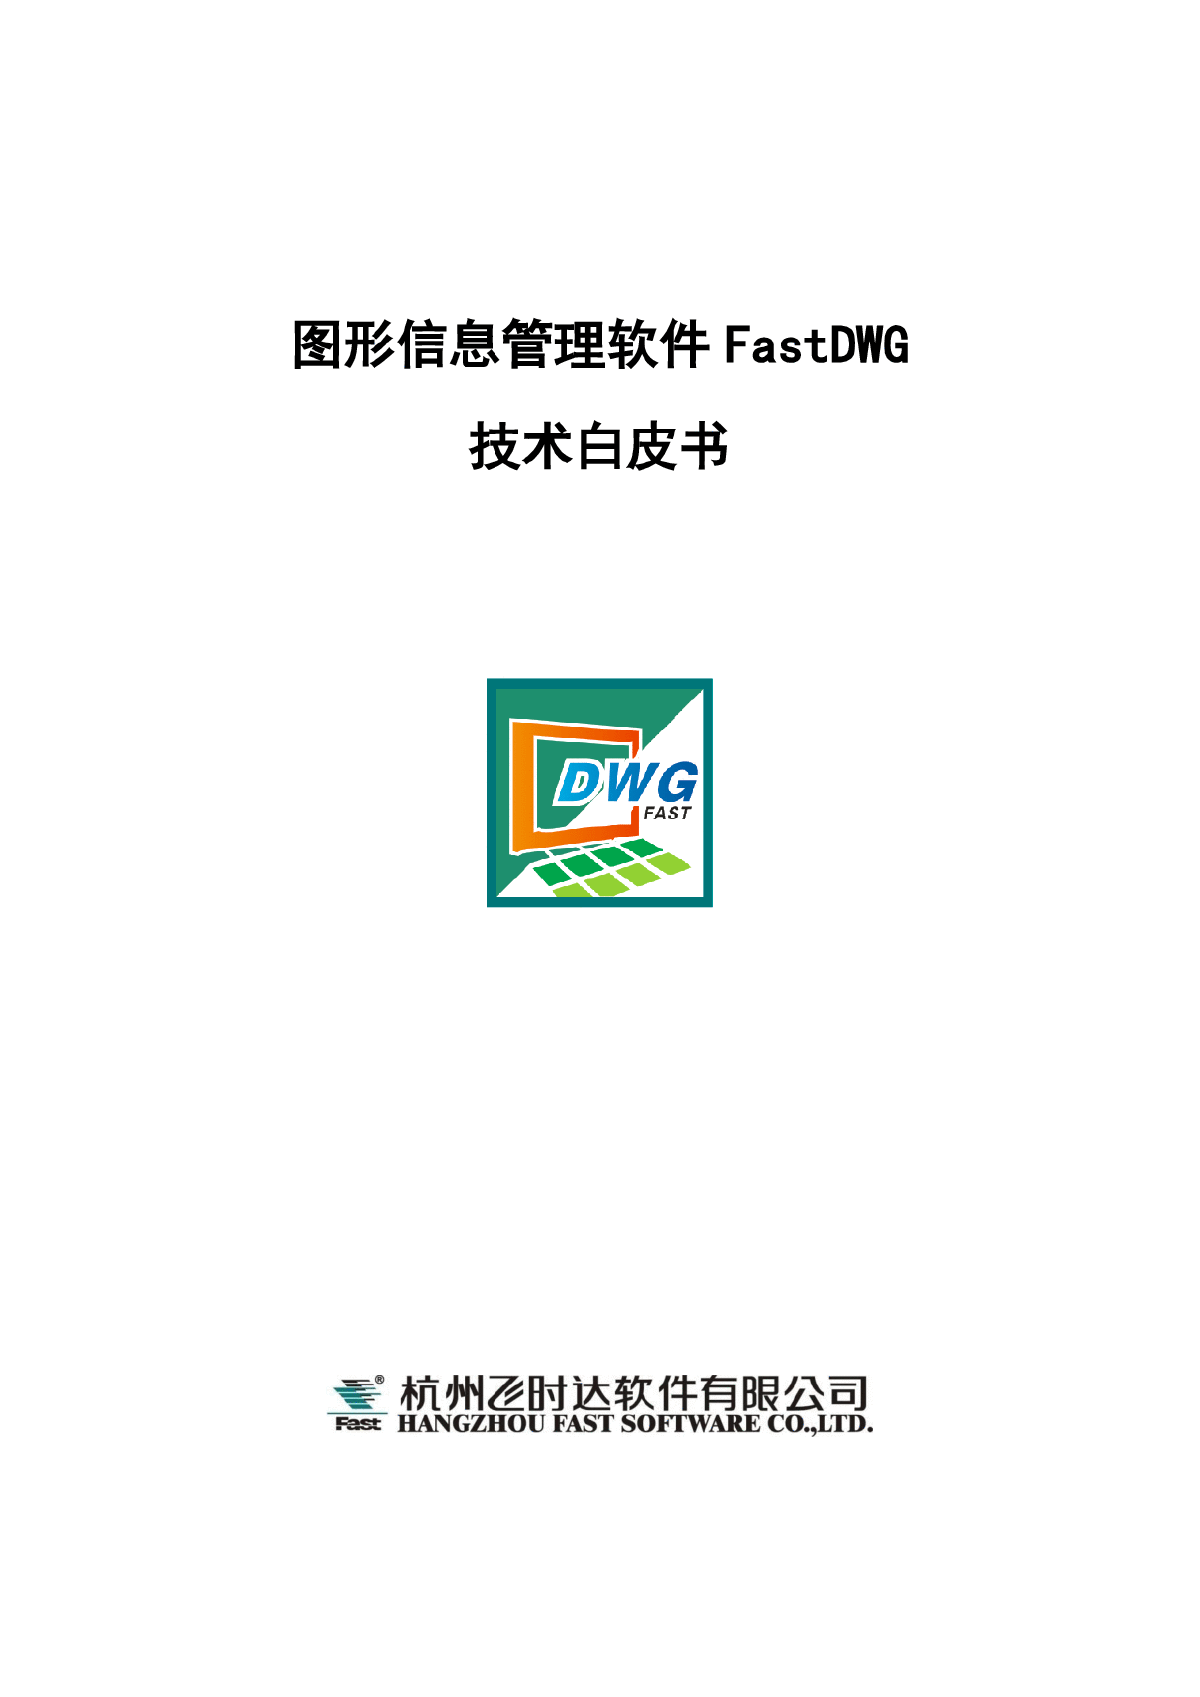 FastDWG图形信息管理软件技术白皮书